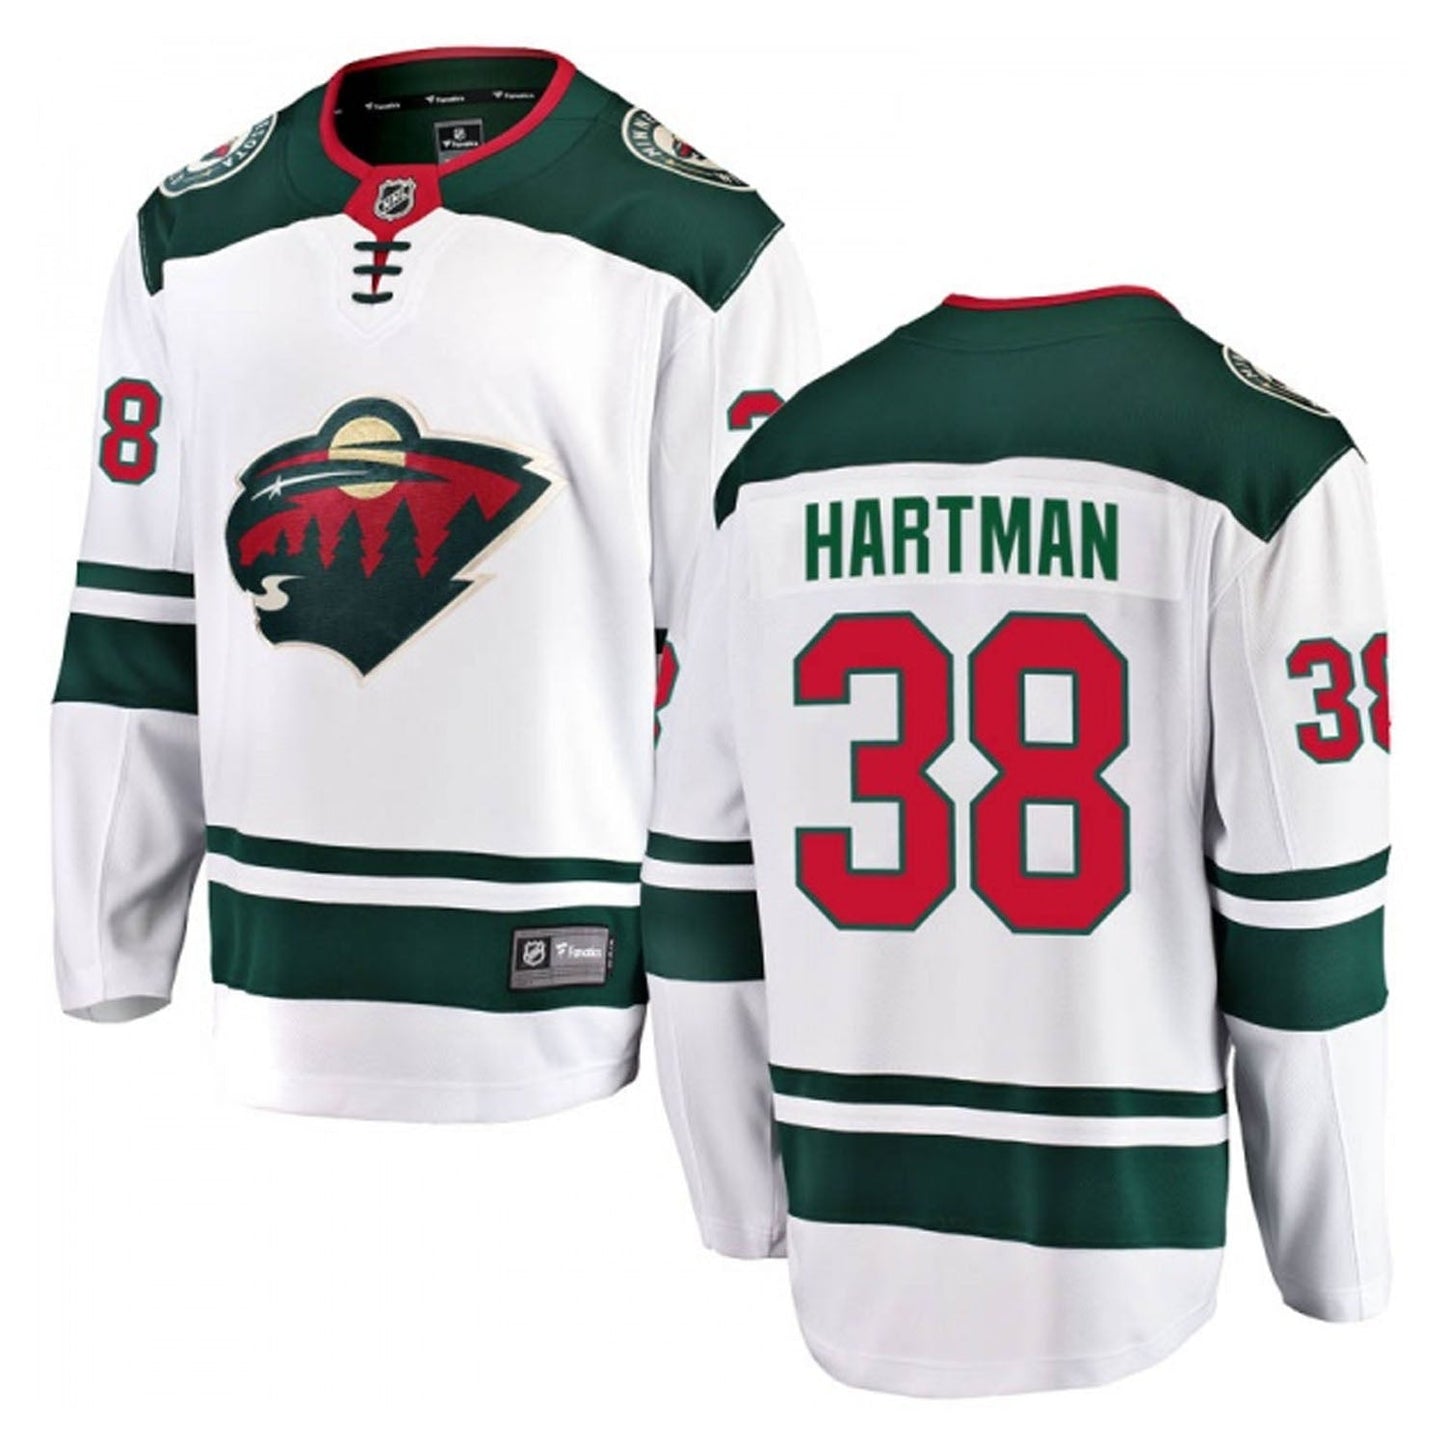 NHL Ryan Hartman Minnesota Wild 38 Jersey